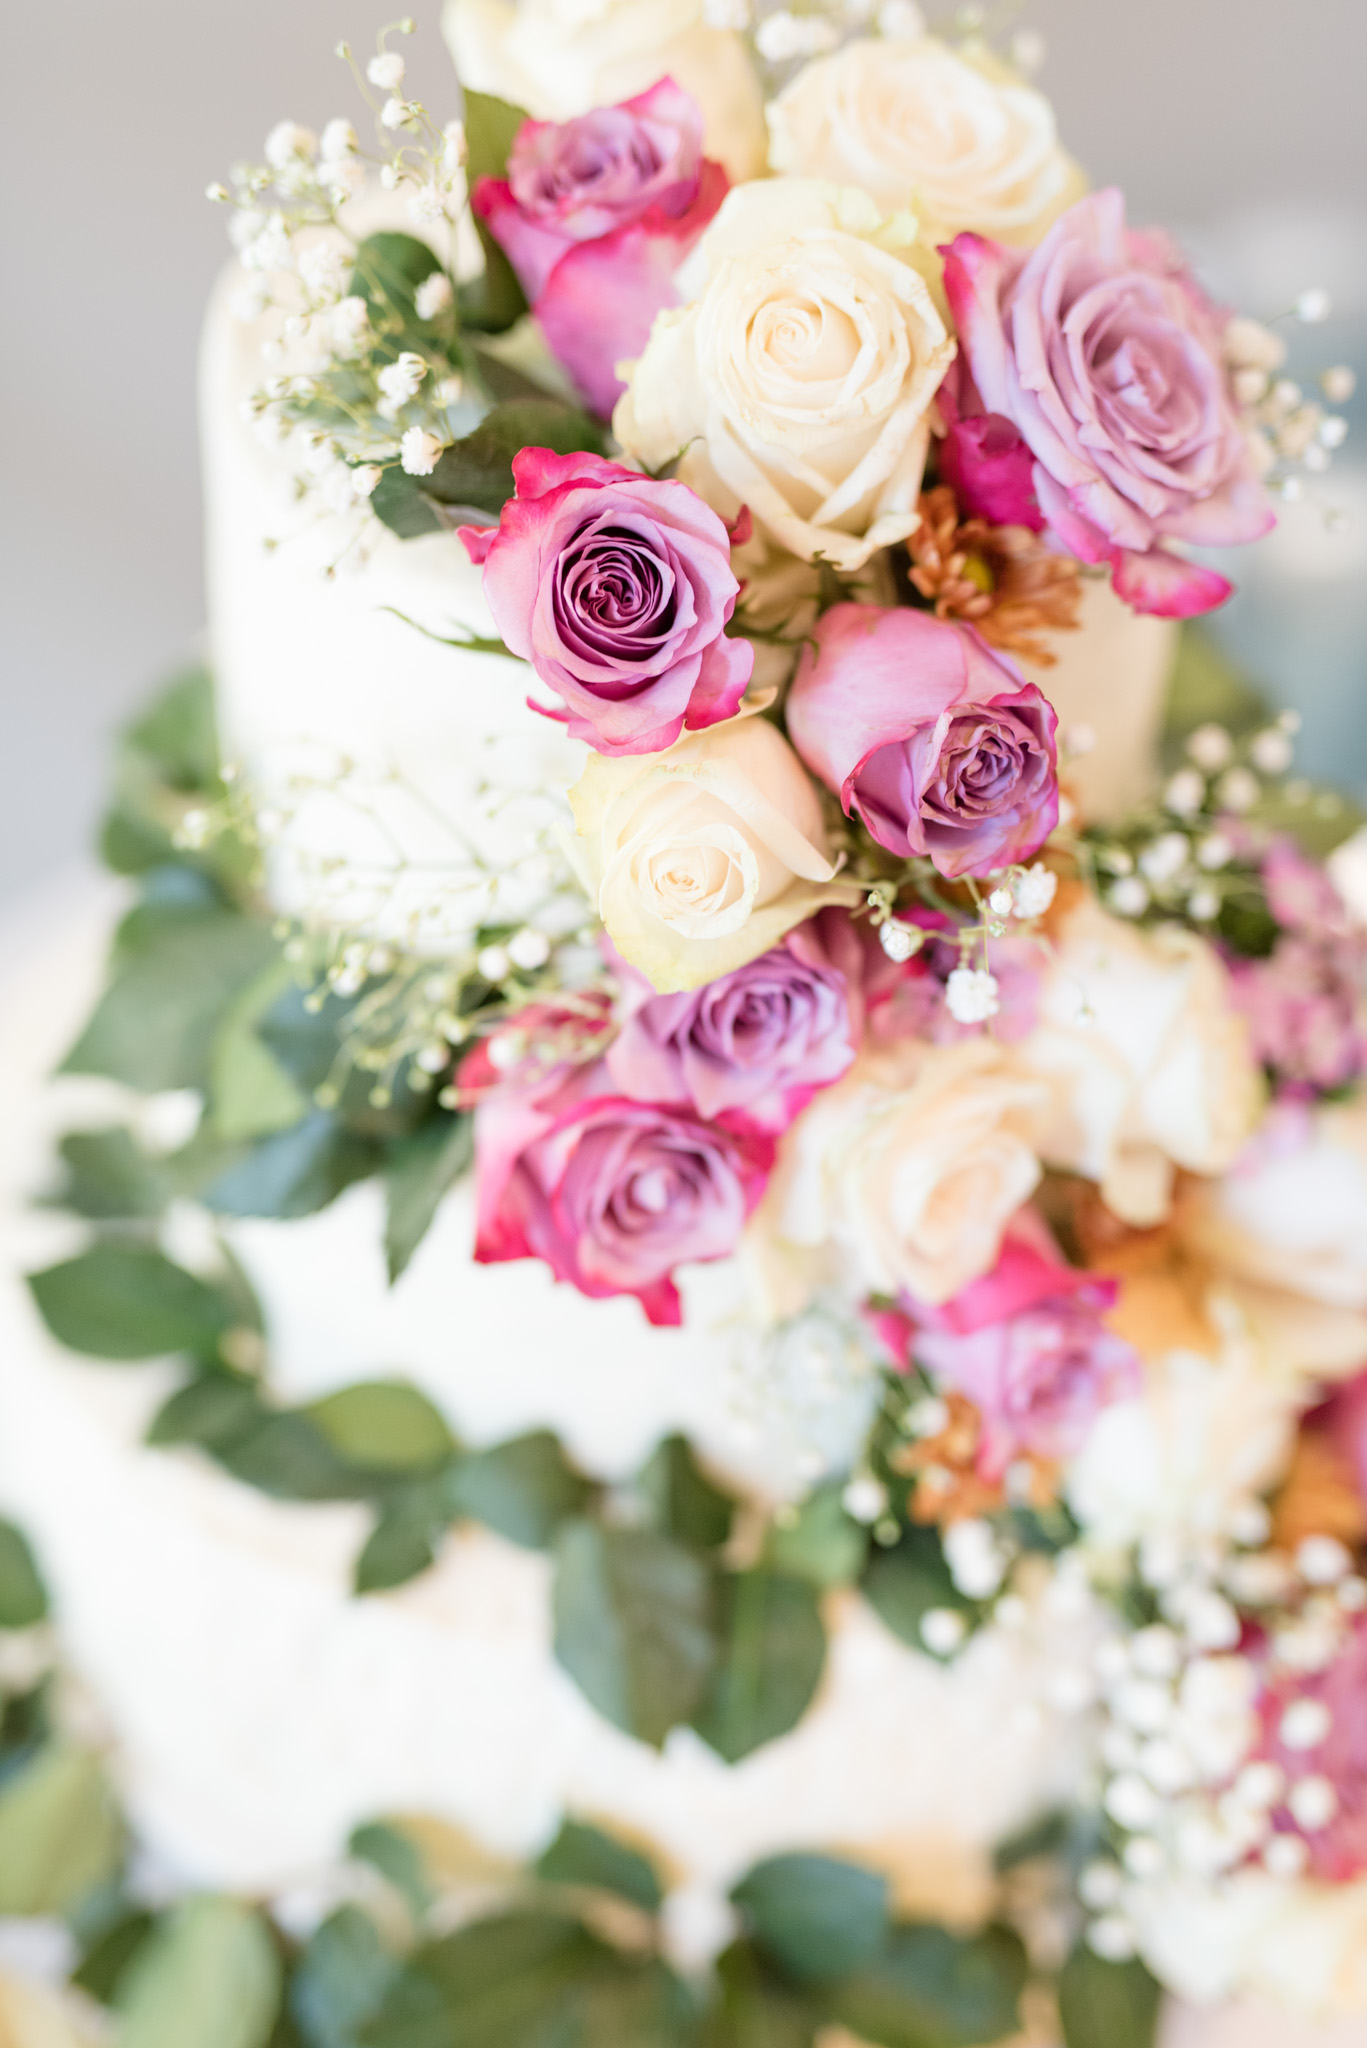 Flowers on wedding cake.